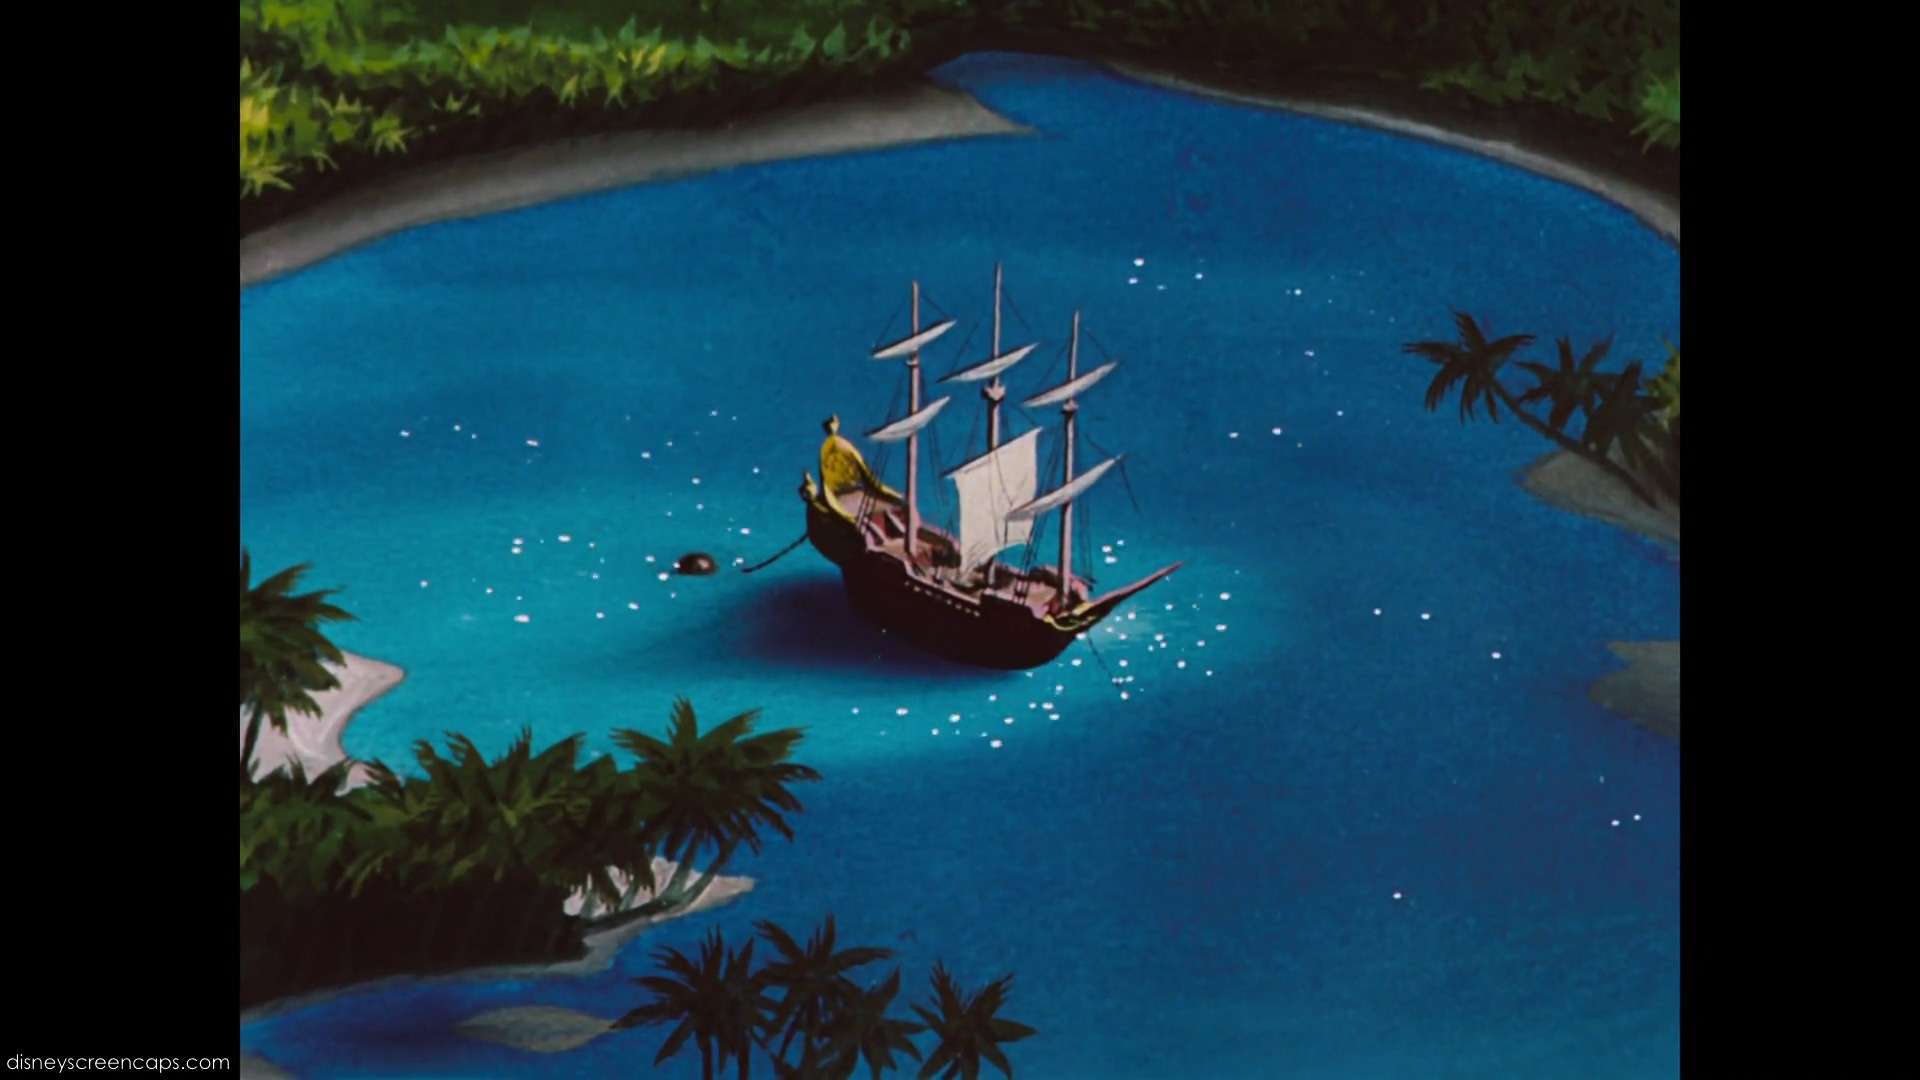 How do you like Captain Hook's ship? Poll Results - Disney - Fanpop